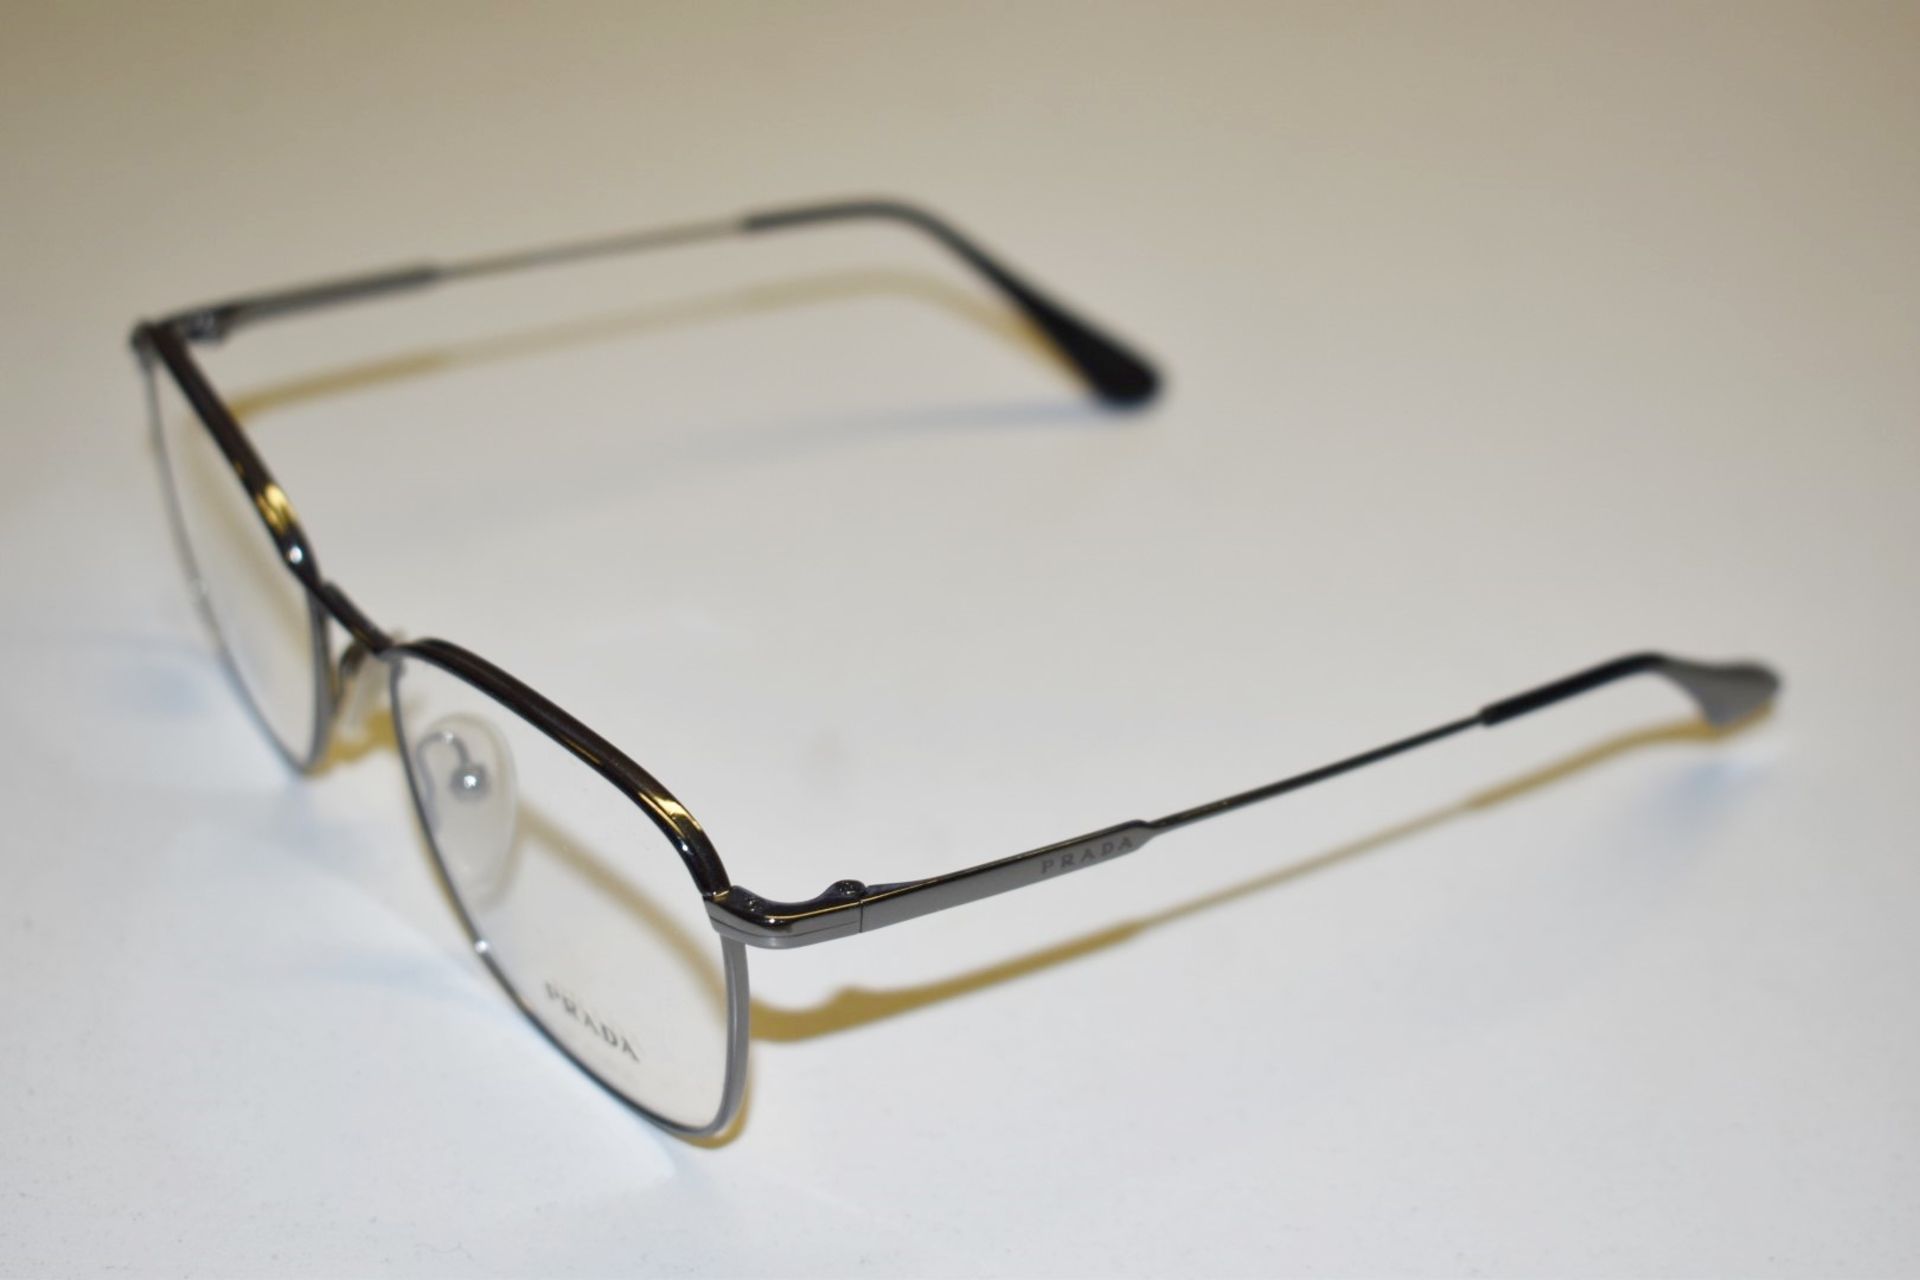 1 x Genuine PRADA Spectacle Eye Glasses Frame - Ex Display Stock  - Ref: GTI185 - CL645 - - Image 3 of 11